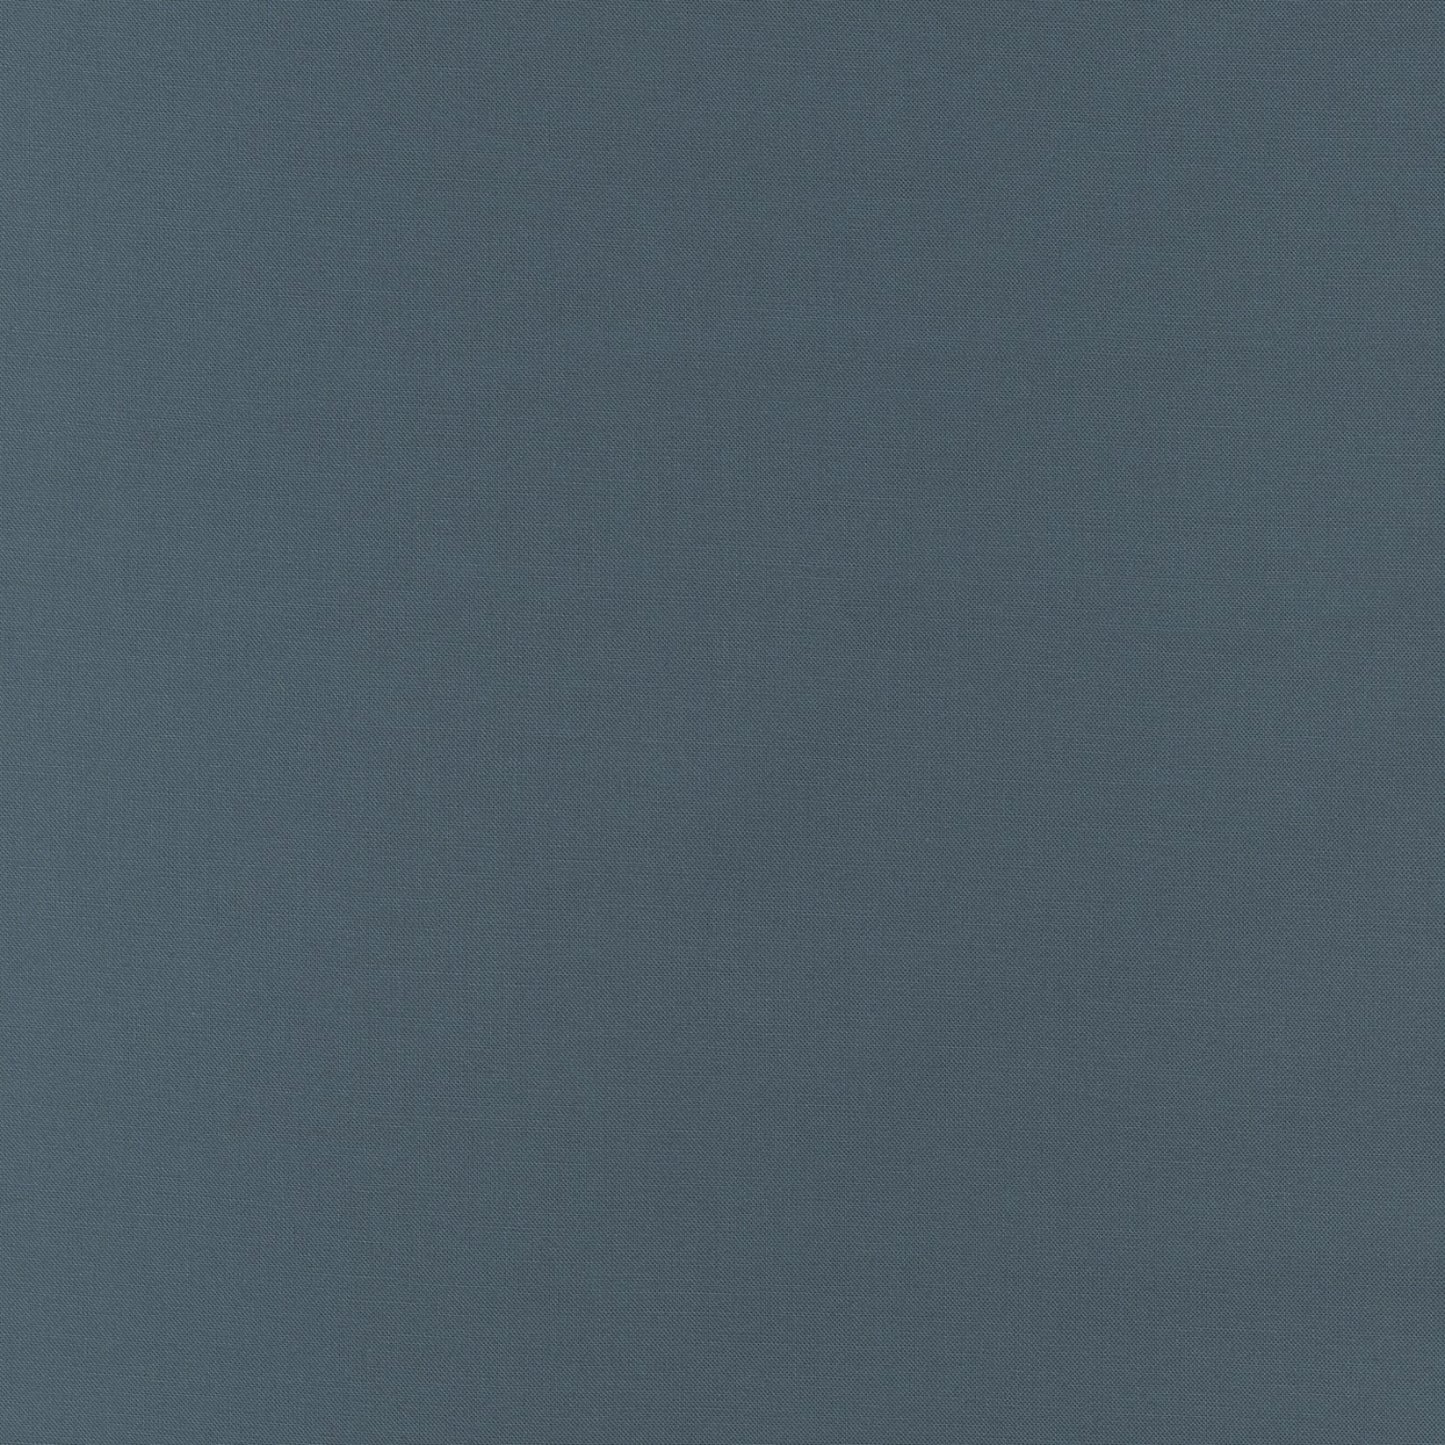 Kona Cotton Fabric - Chalkboard - Blueish Grey